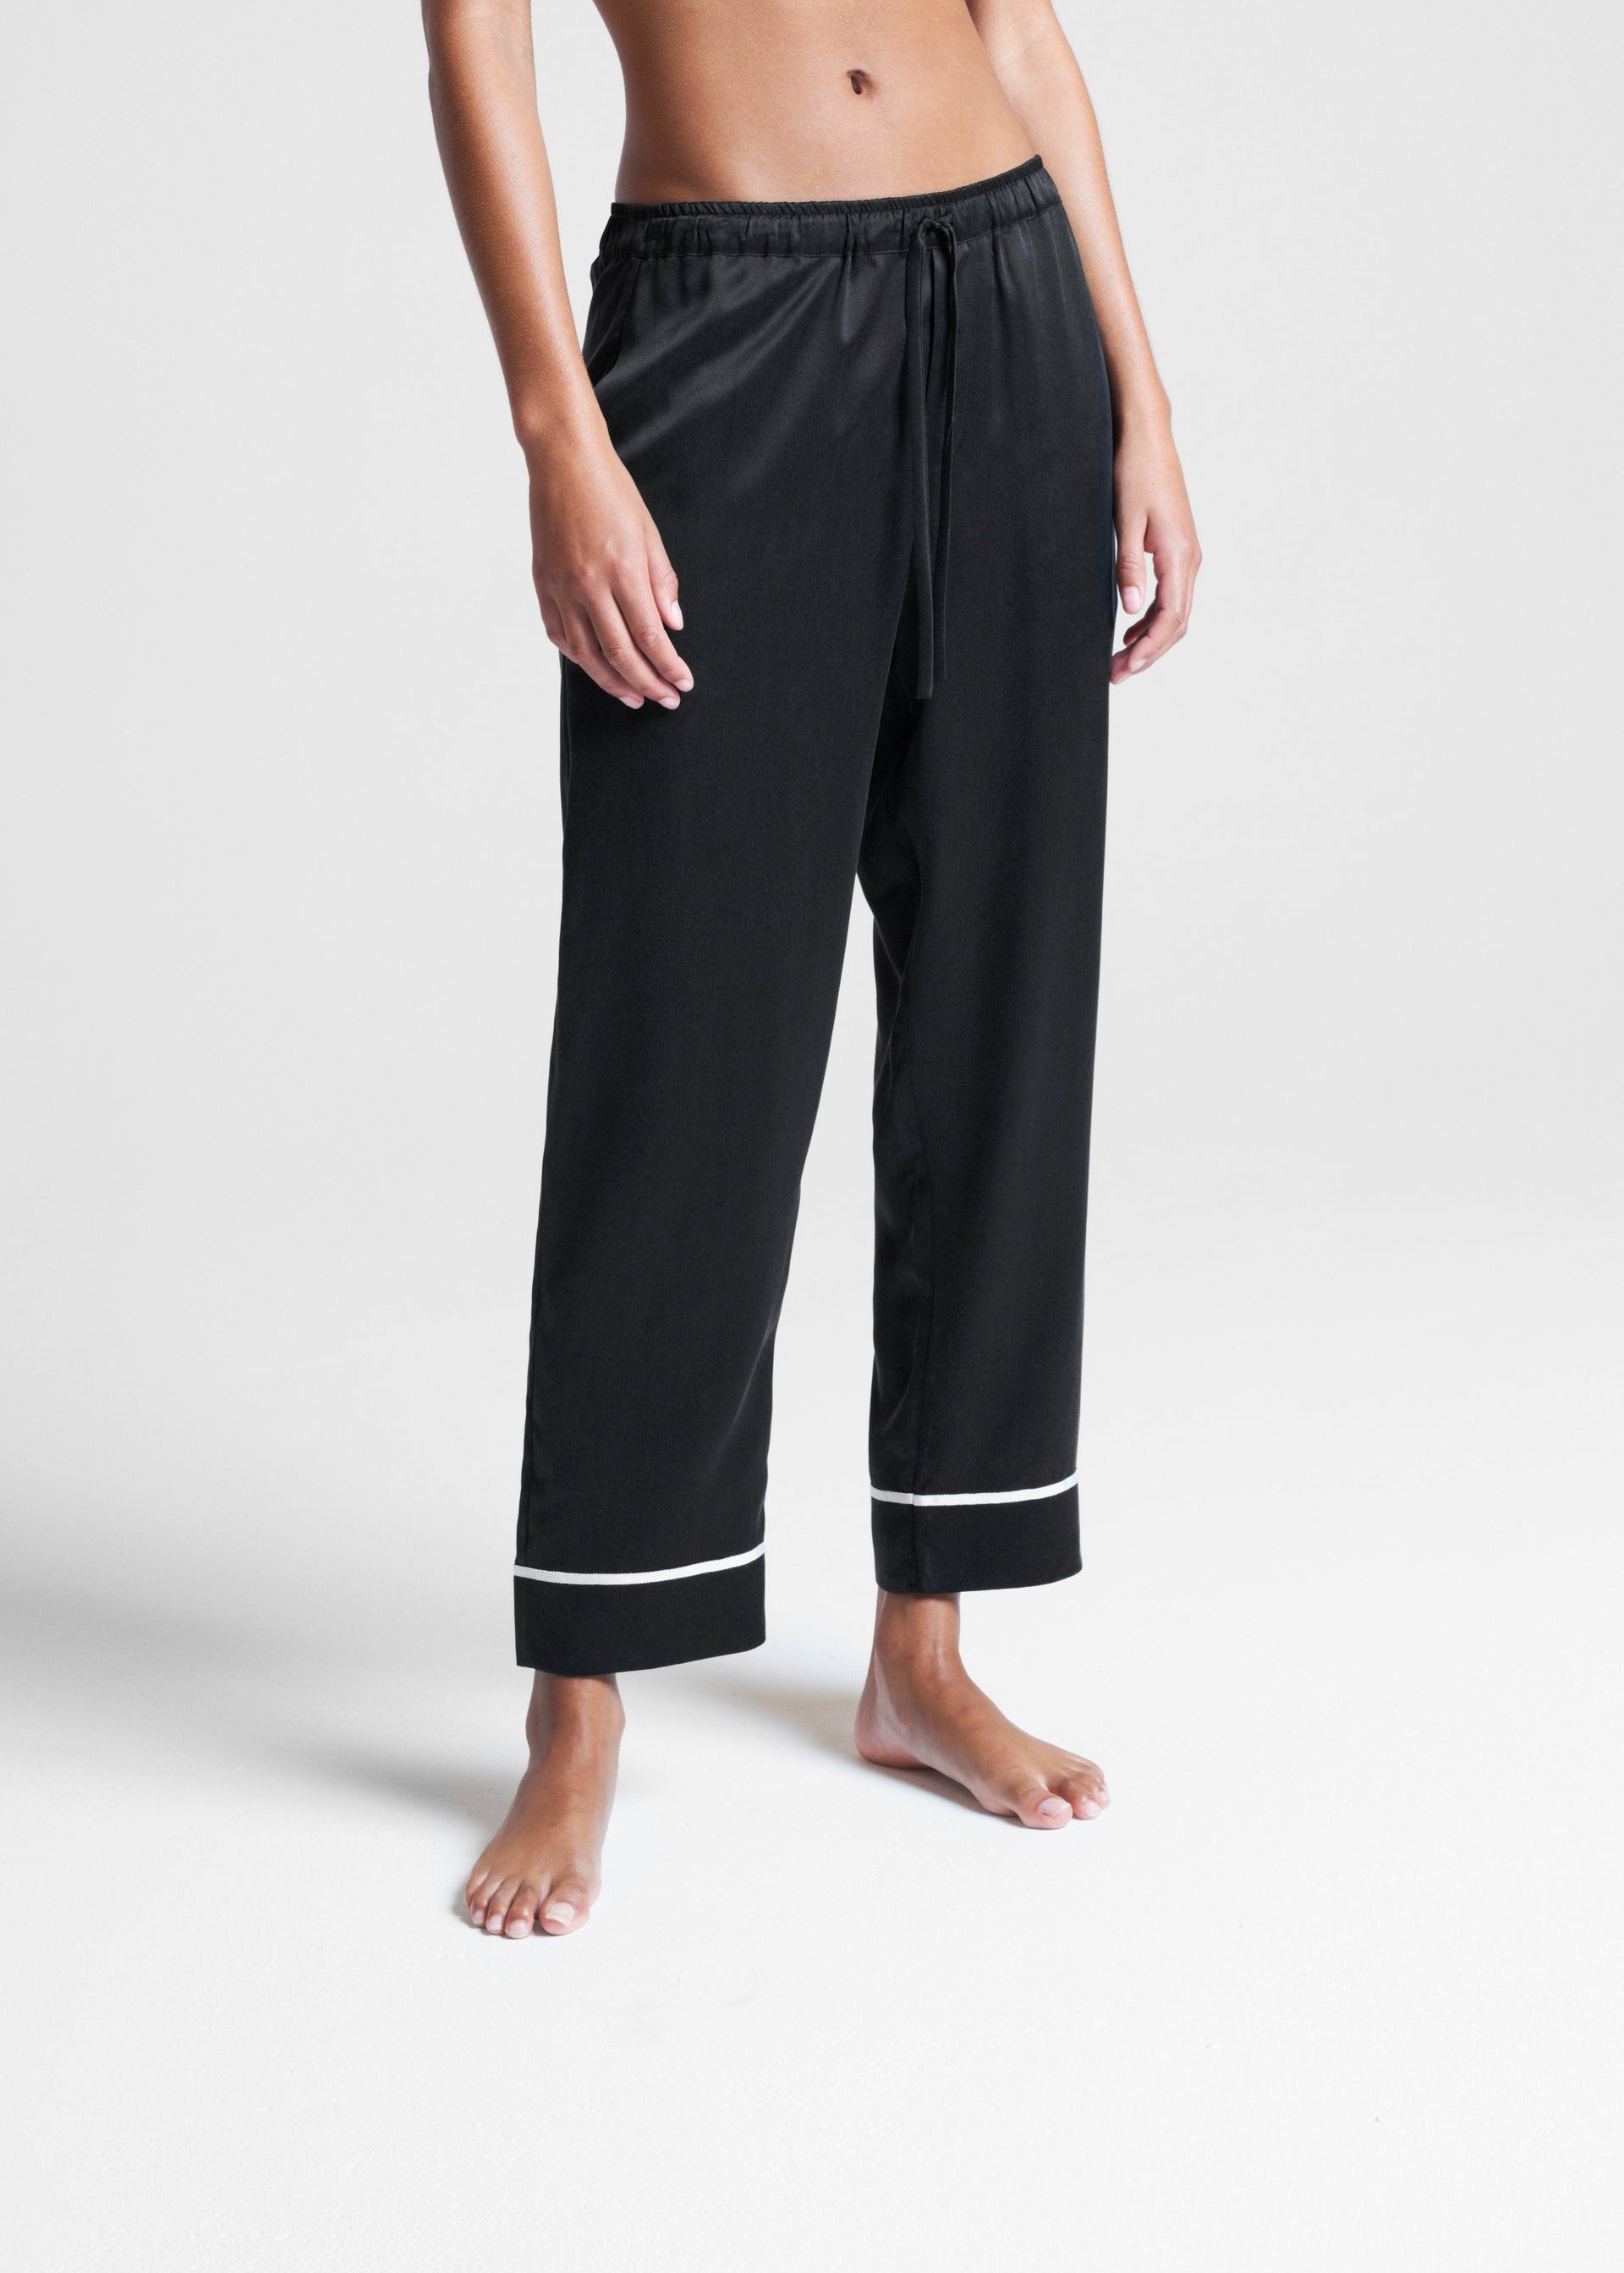 Sydney Cropped Pyjama Bottom Black Ecru Edged Silk